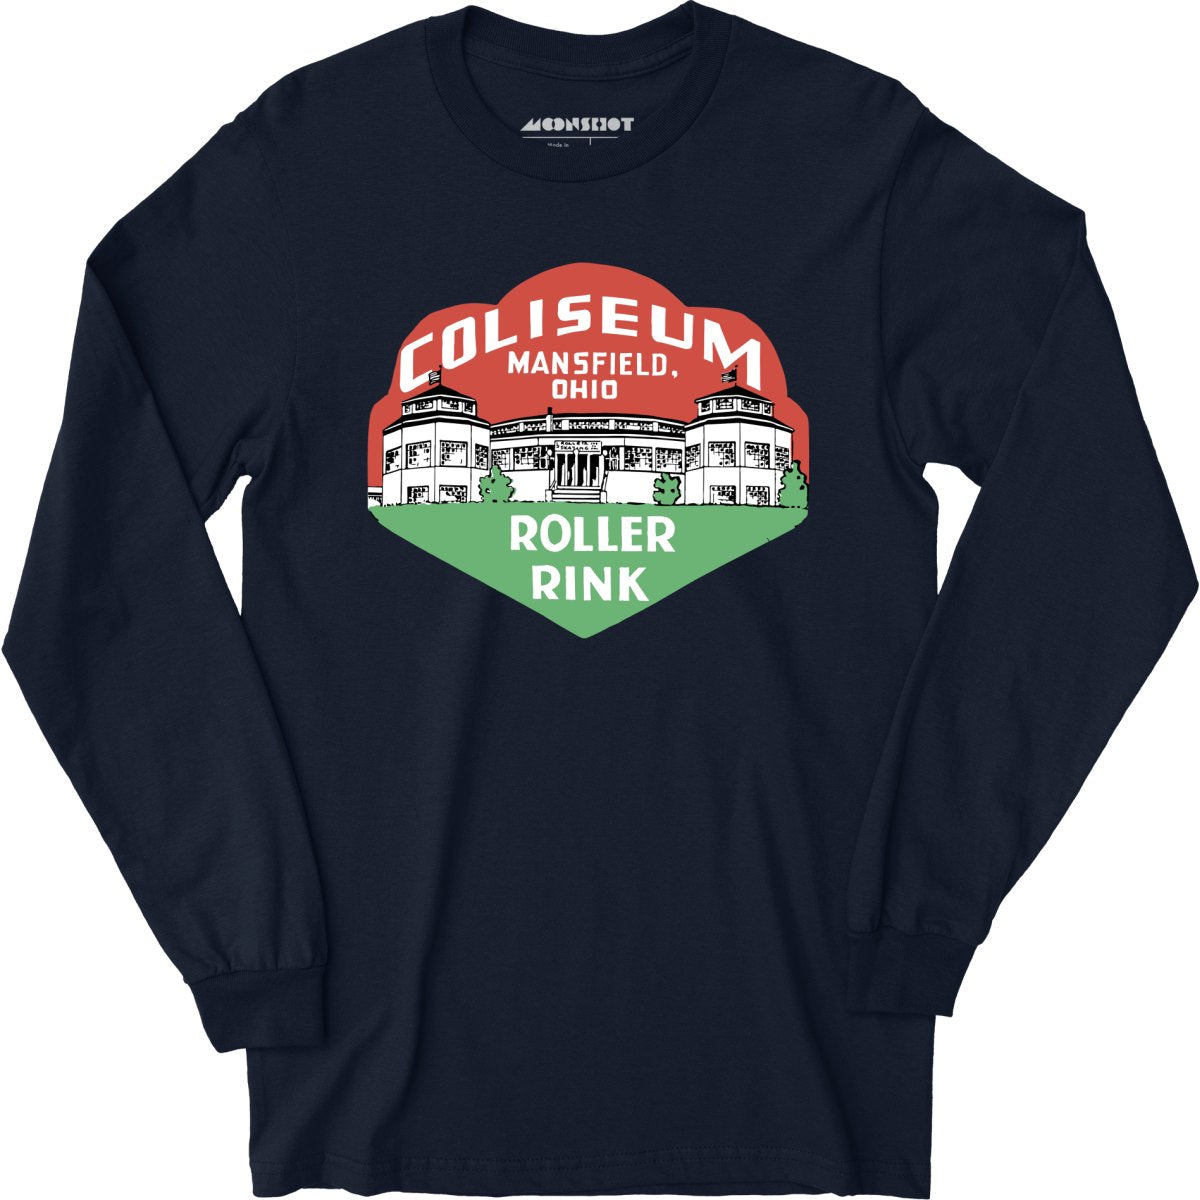 Coliseum - Mansfield, OH - Vintage Roller Rink - Long Sleeve T-Shirt